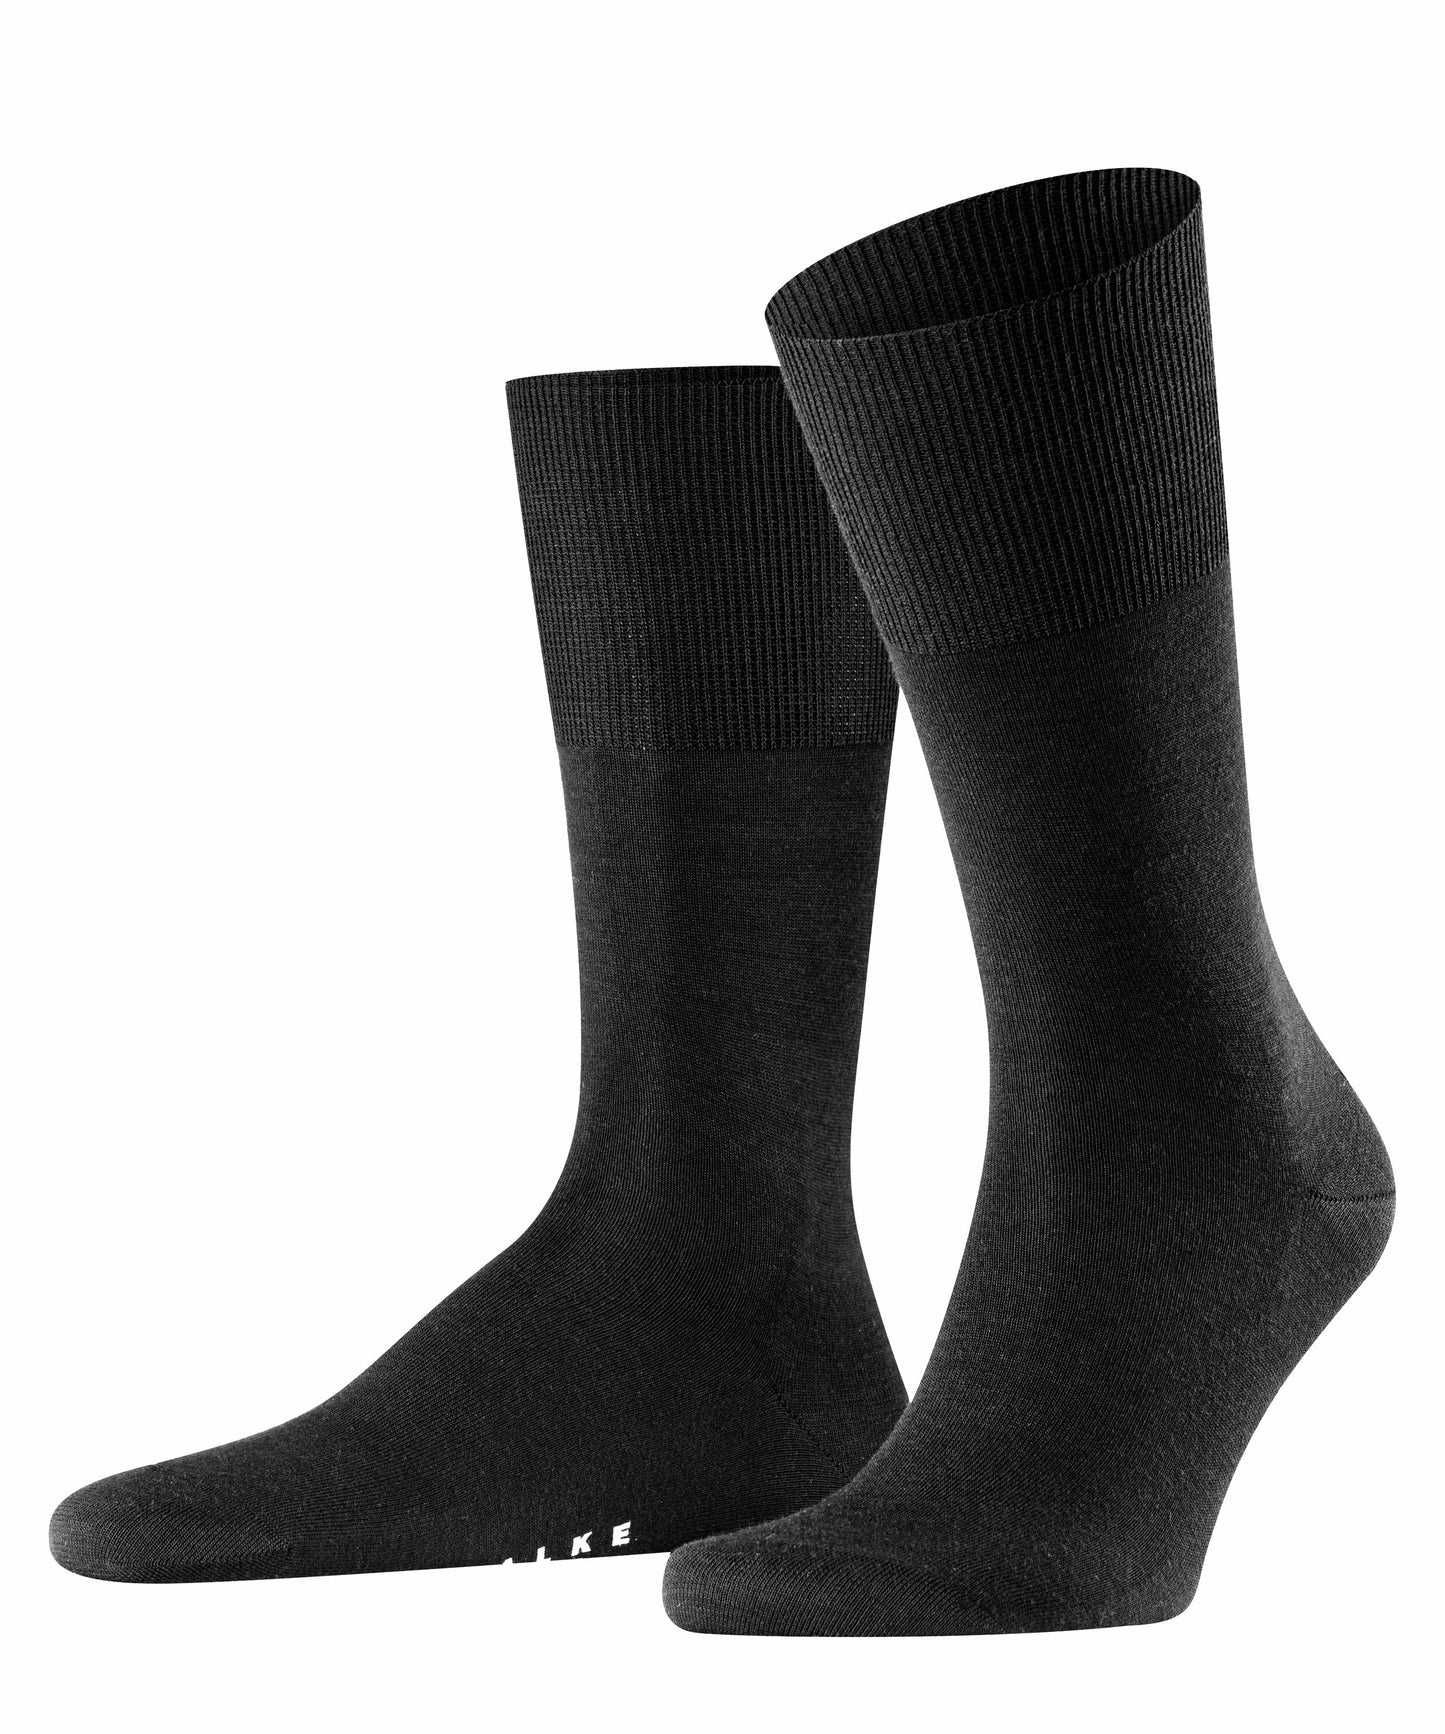 Navy merino-cotton socks Falke Airport - 14435/6370